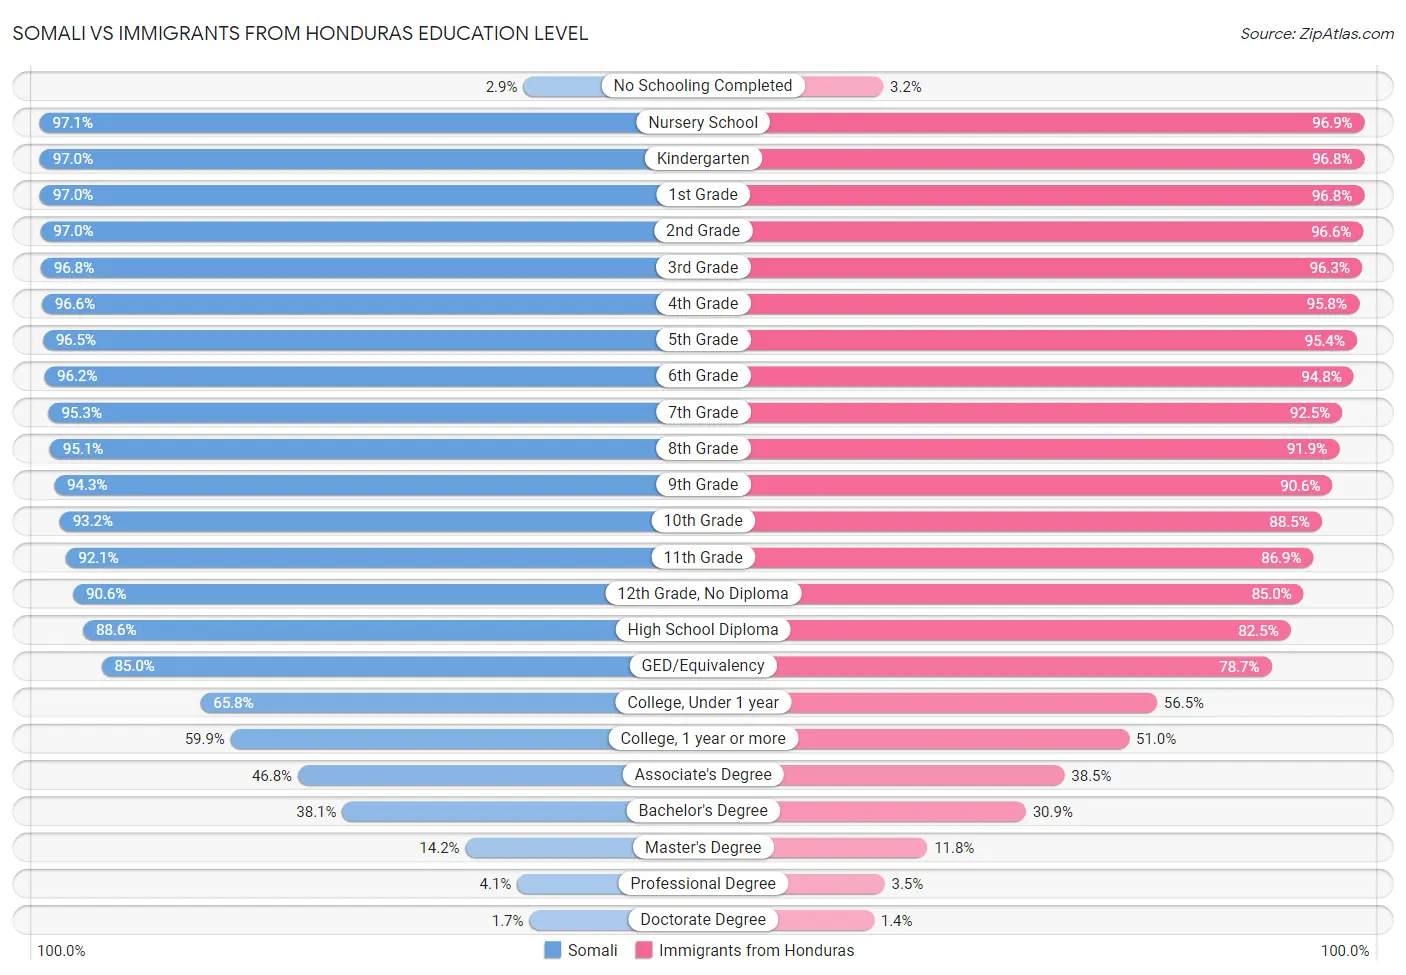 Somali vs Immigrants from Honduras Education Level